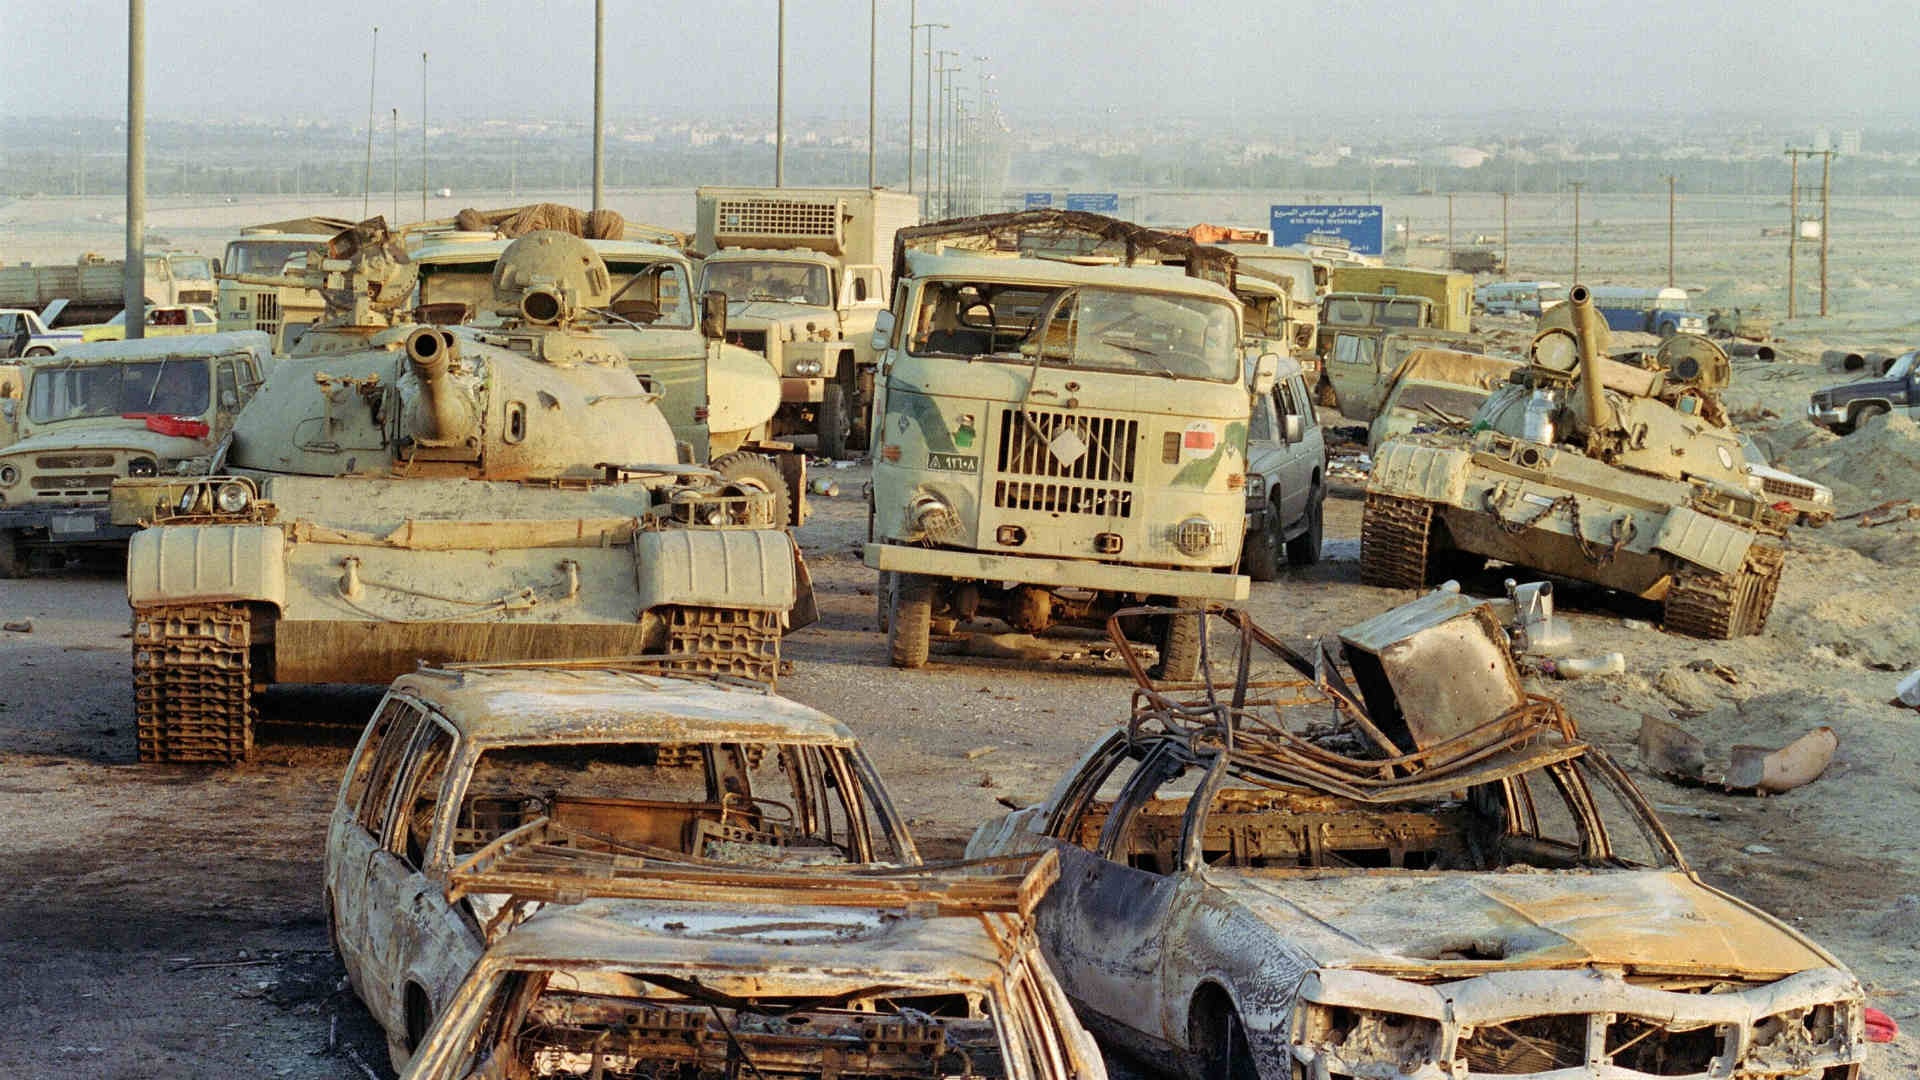 C:\Users\Guest 1\Desktop\bombed convoy iraq 1991.jpg